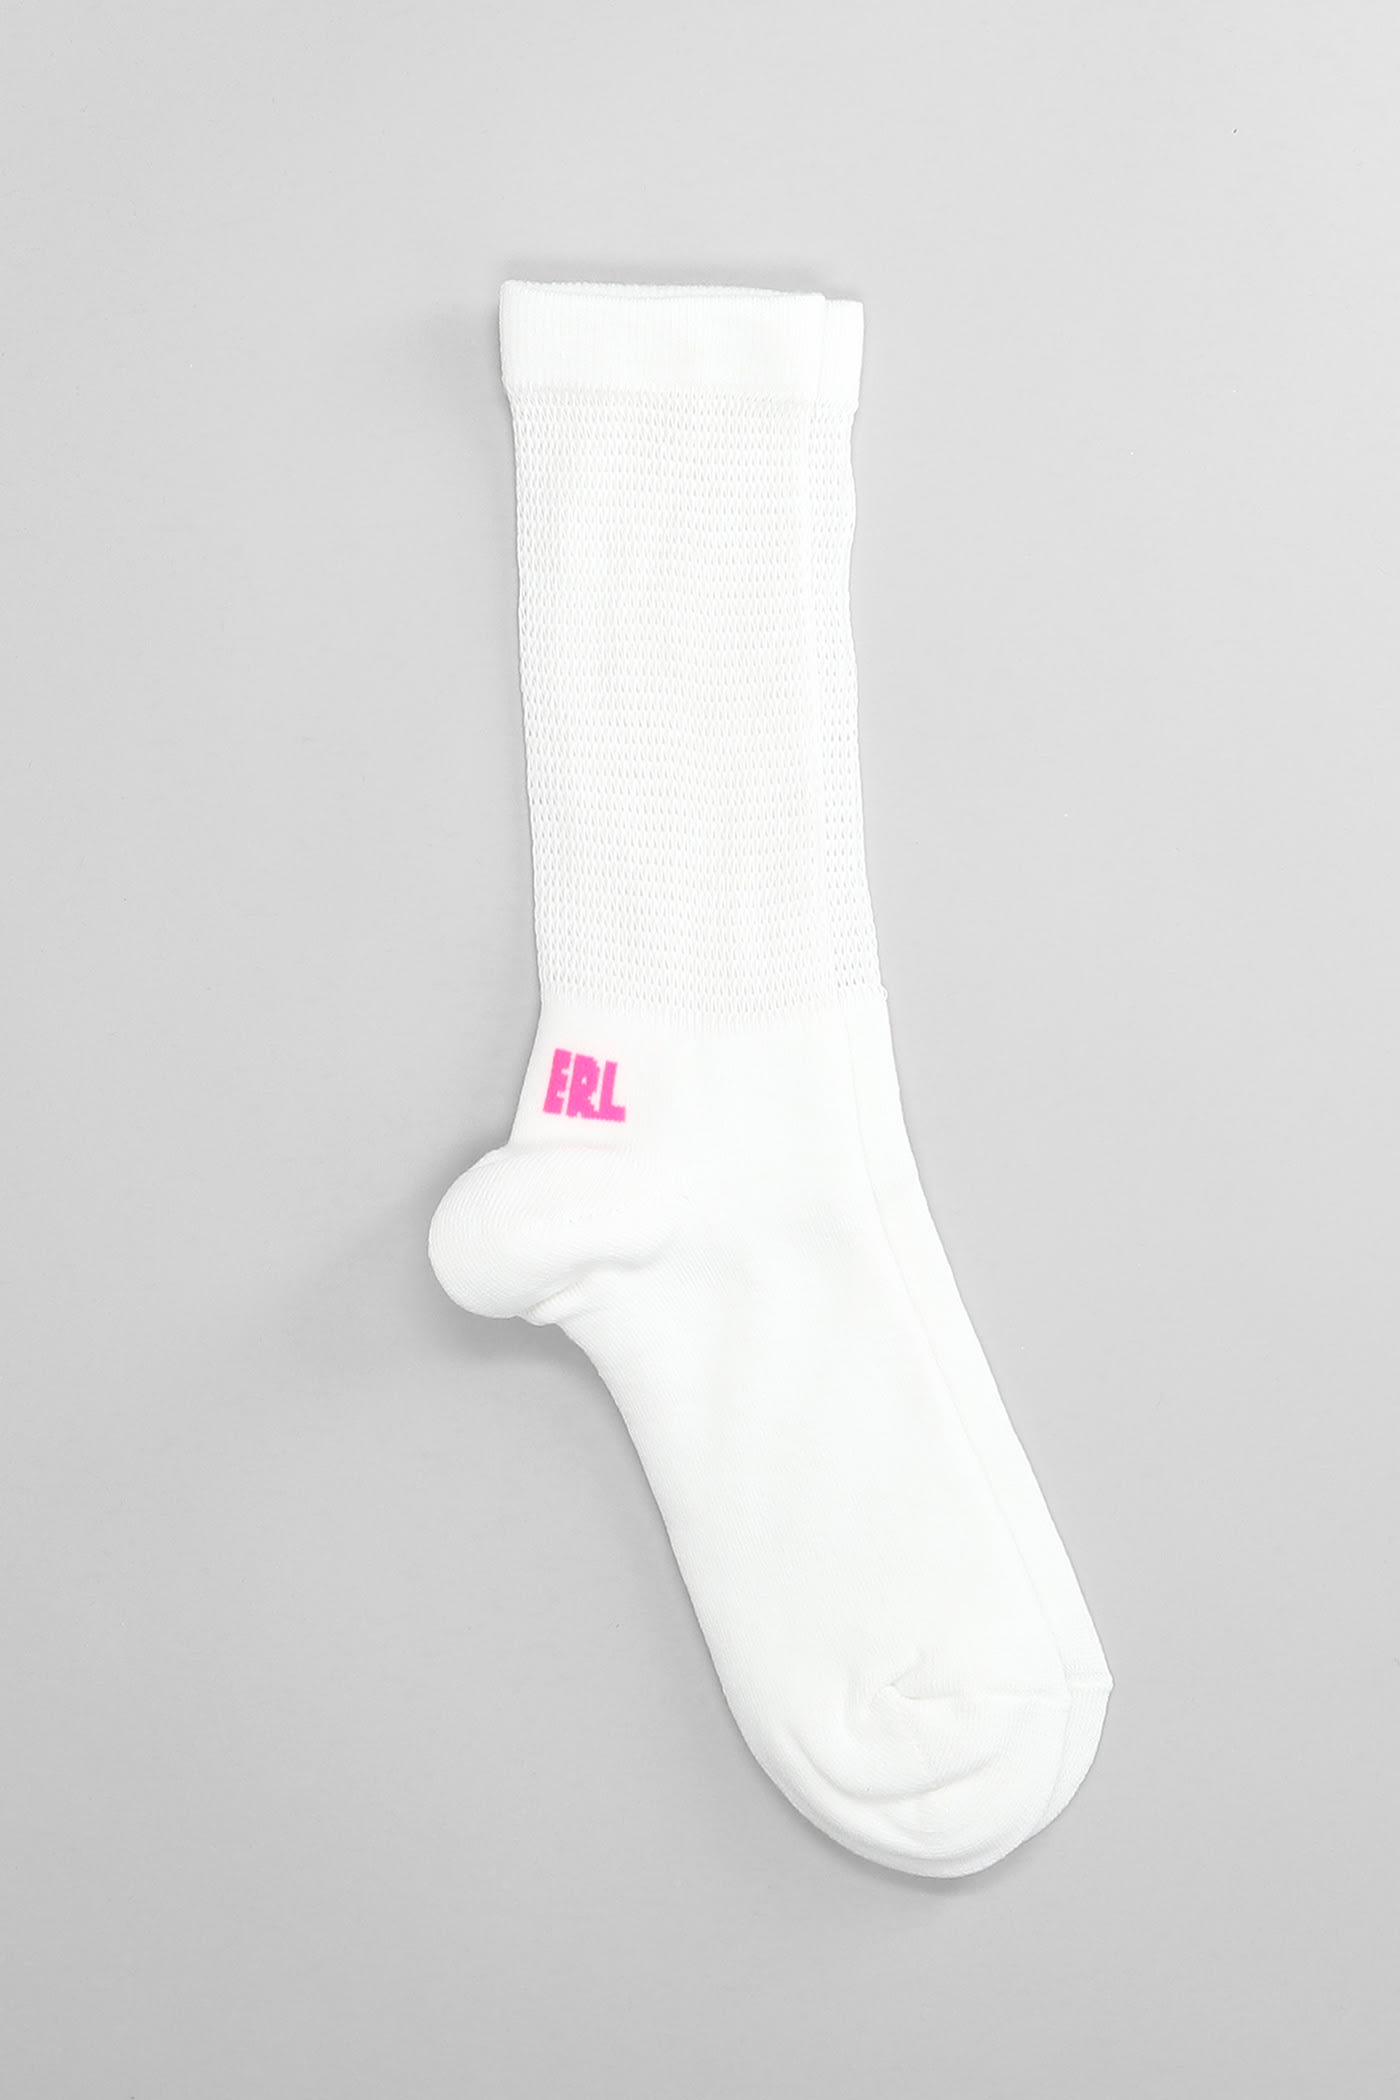 ERL Socks In White Cotton